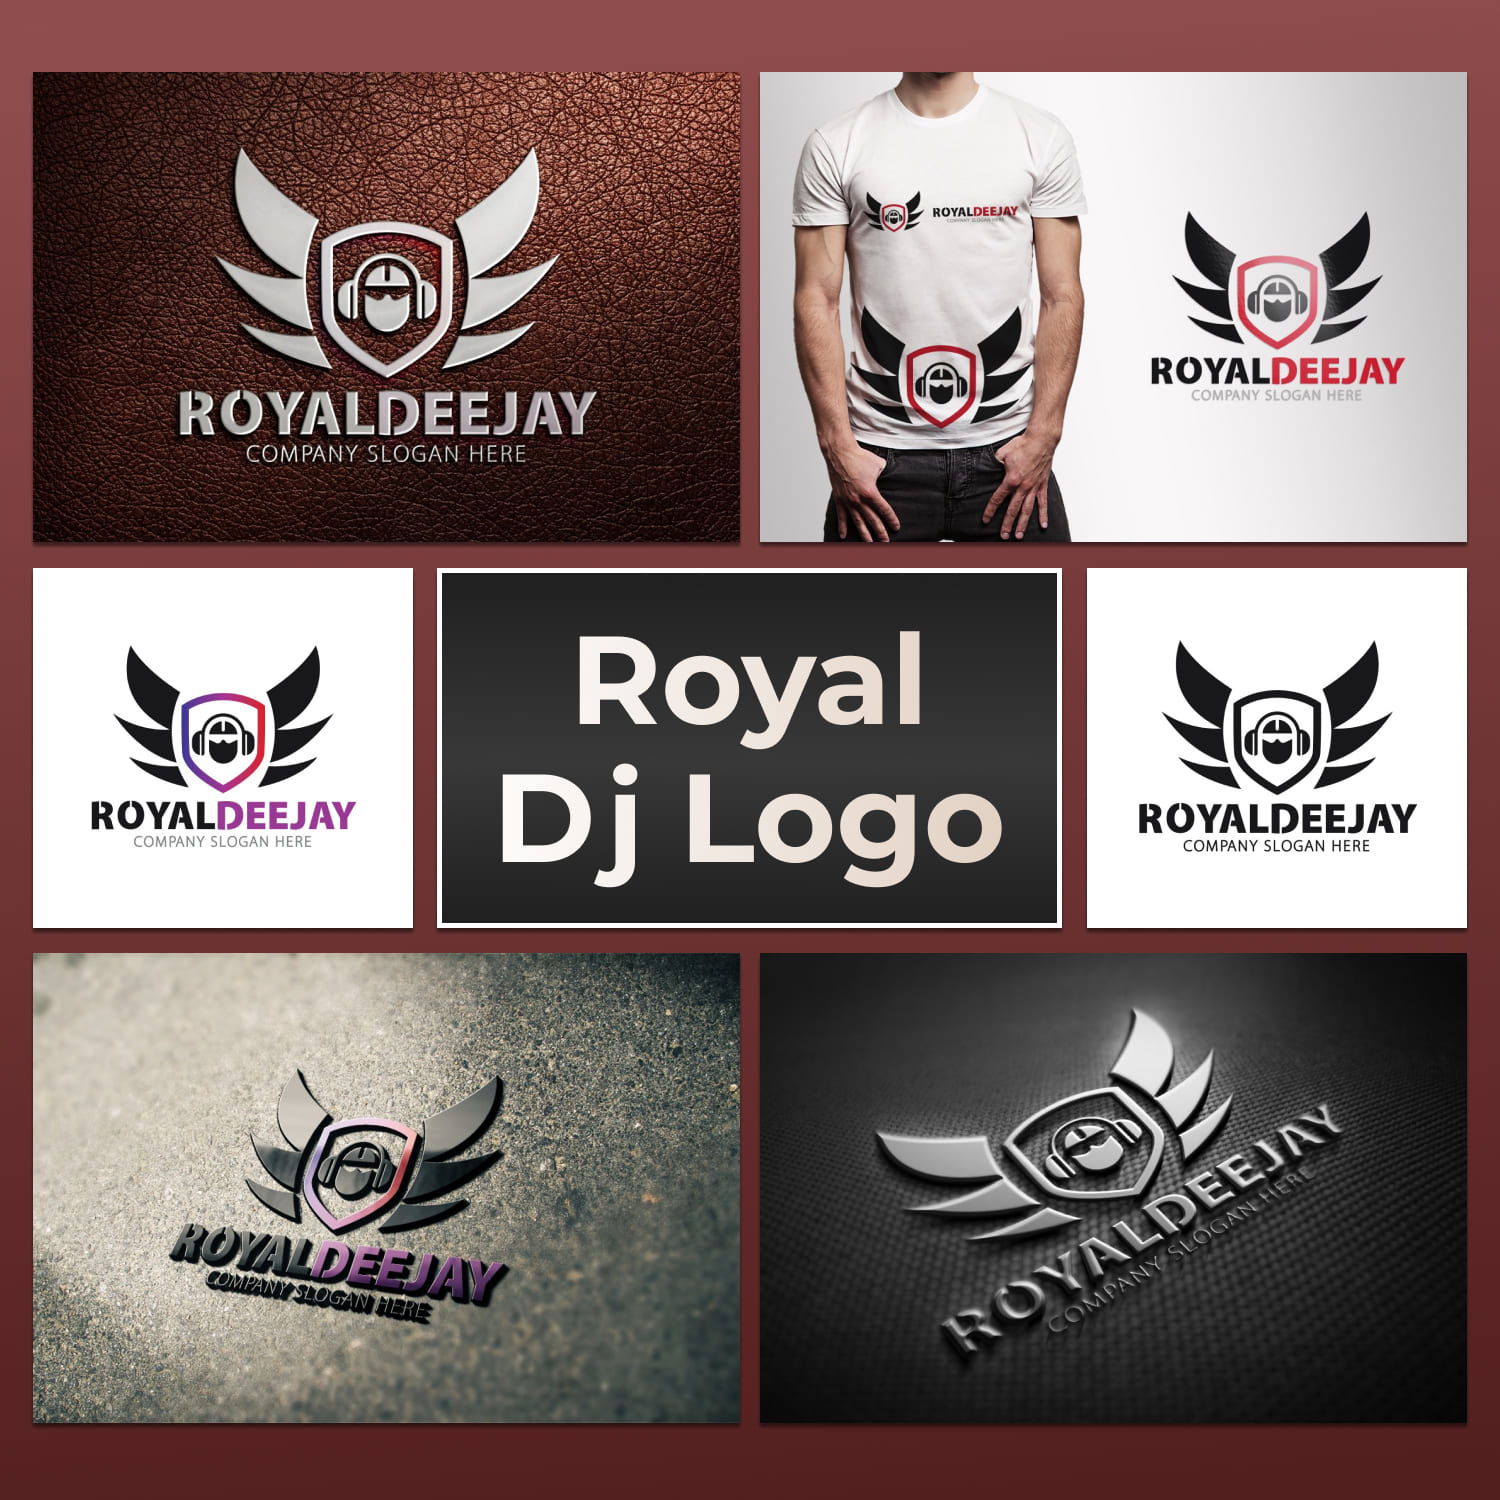 Royal Dj Logo Design Template cover image.